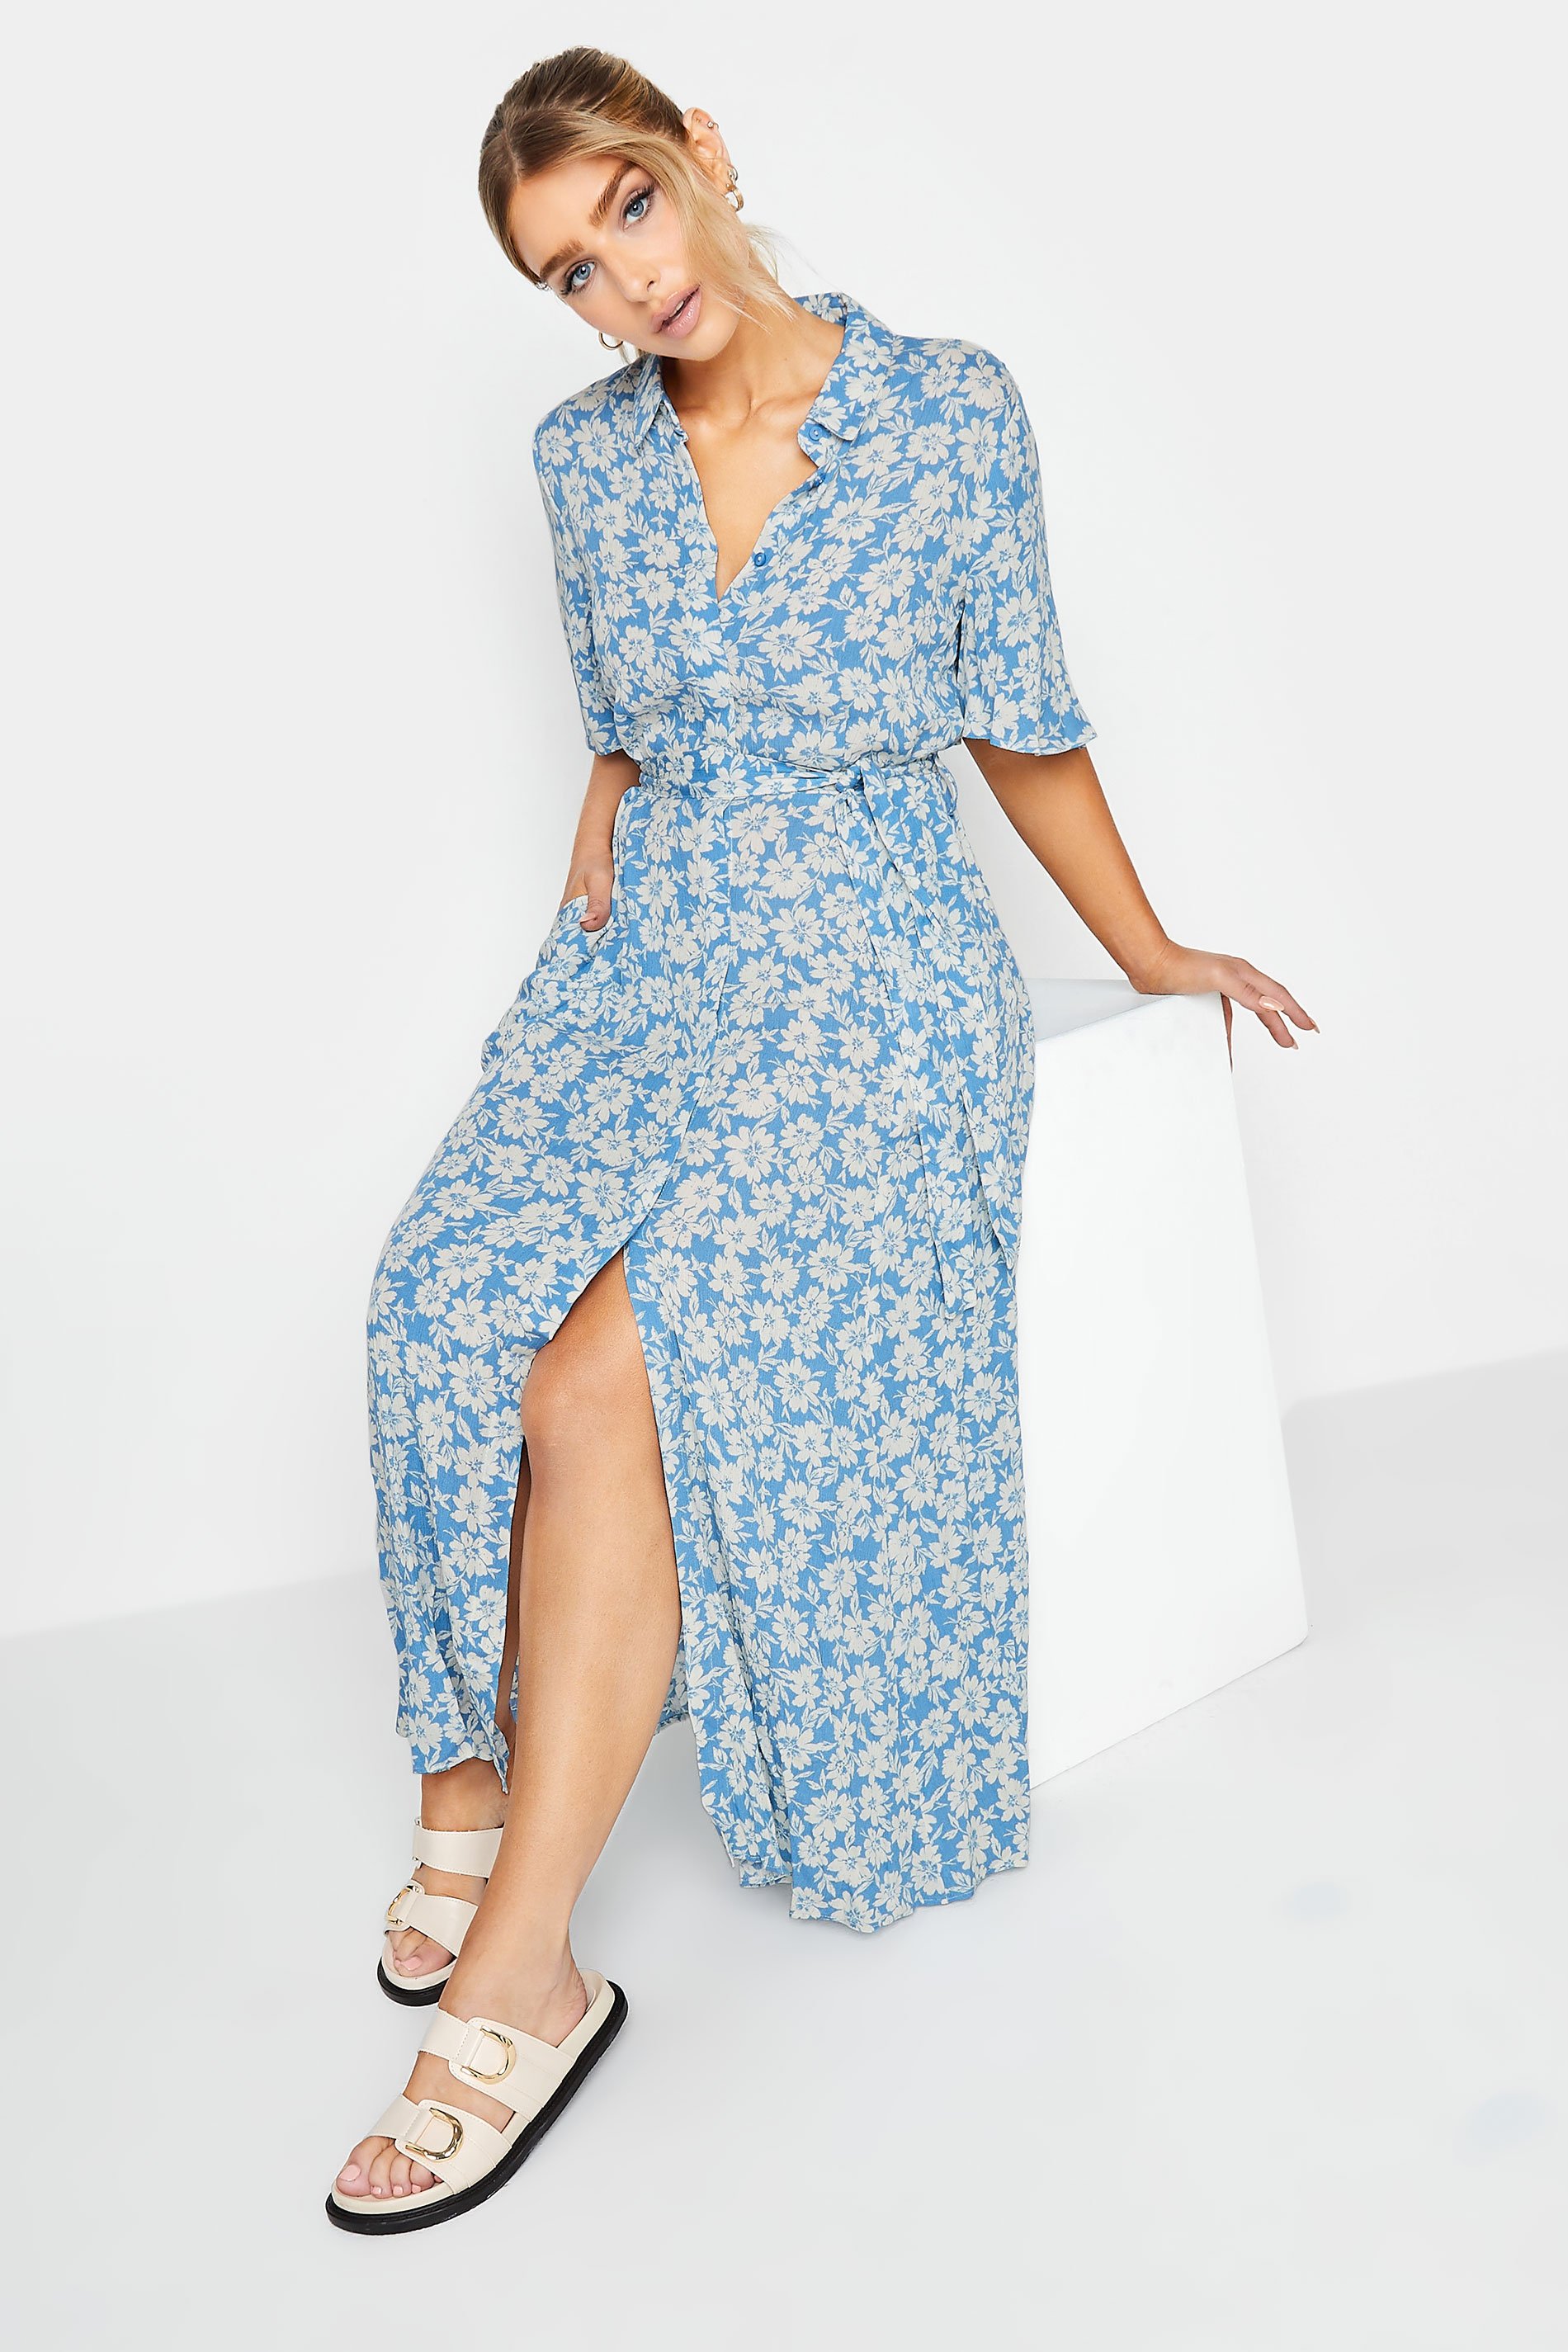 M&Co Light Blue Floral Print Maxi Shirt Dress | M&Co 1